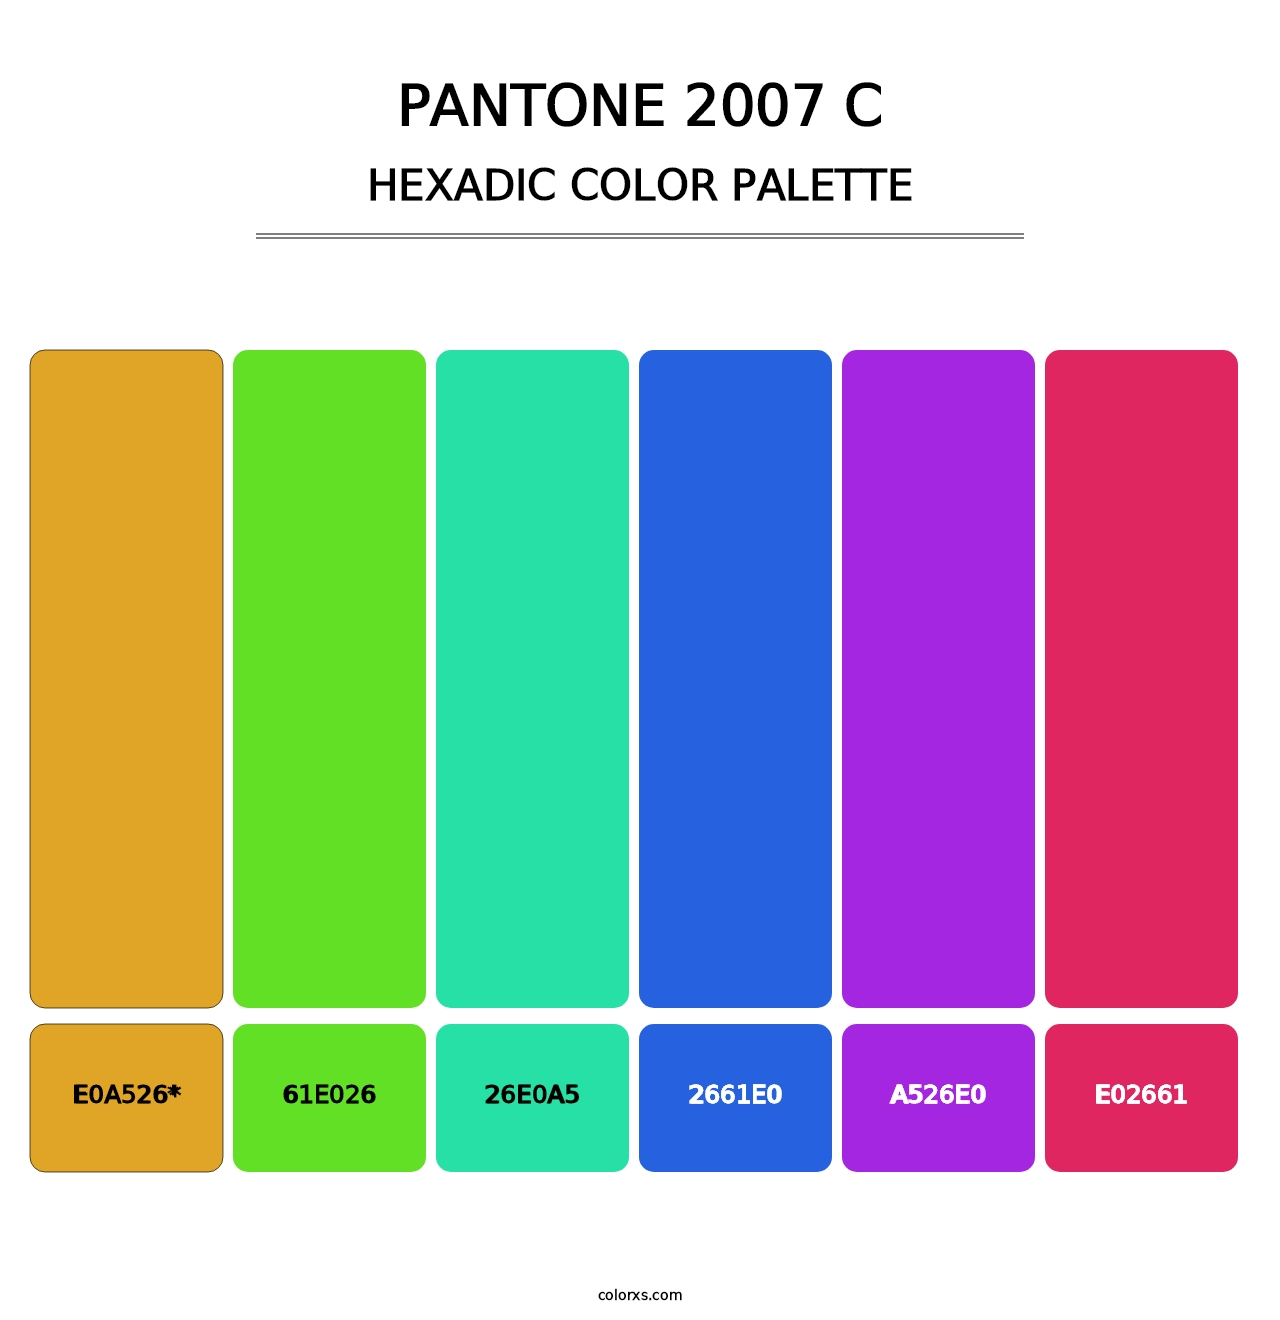 PANTONE 2007 C - Hexadic Color Palette